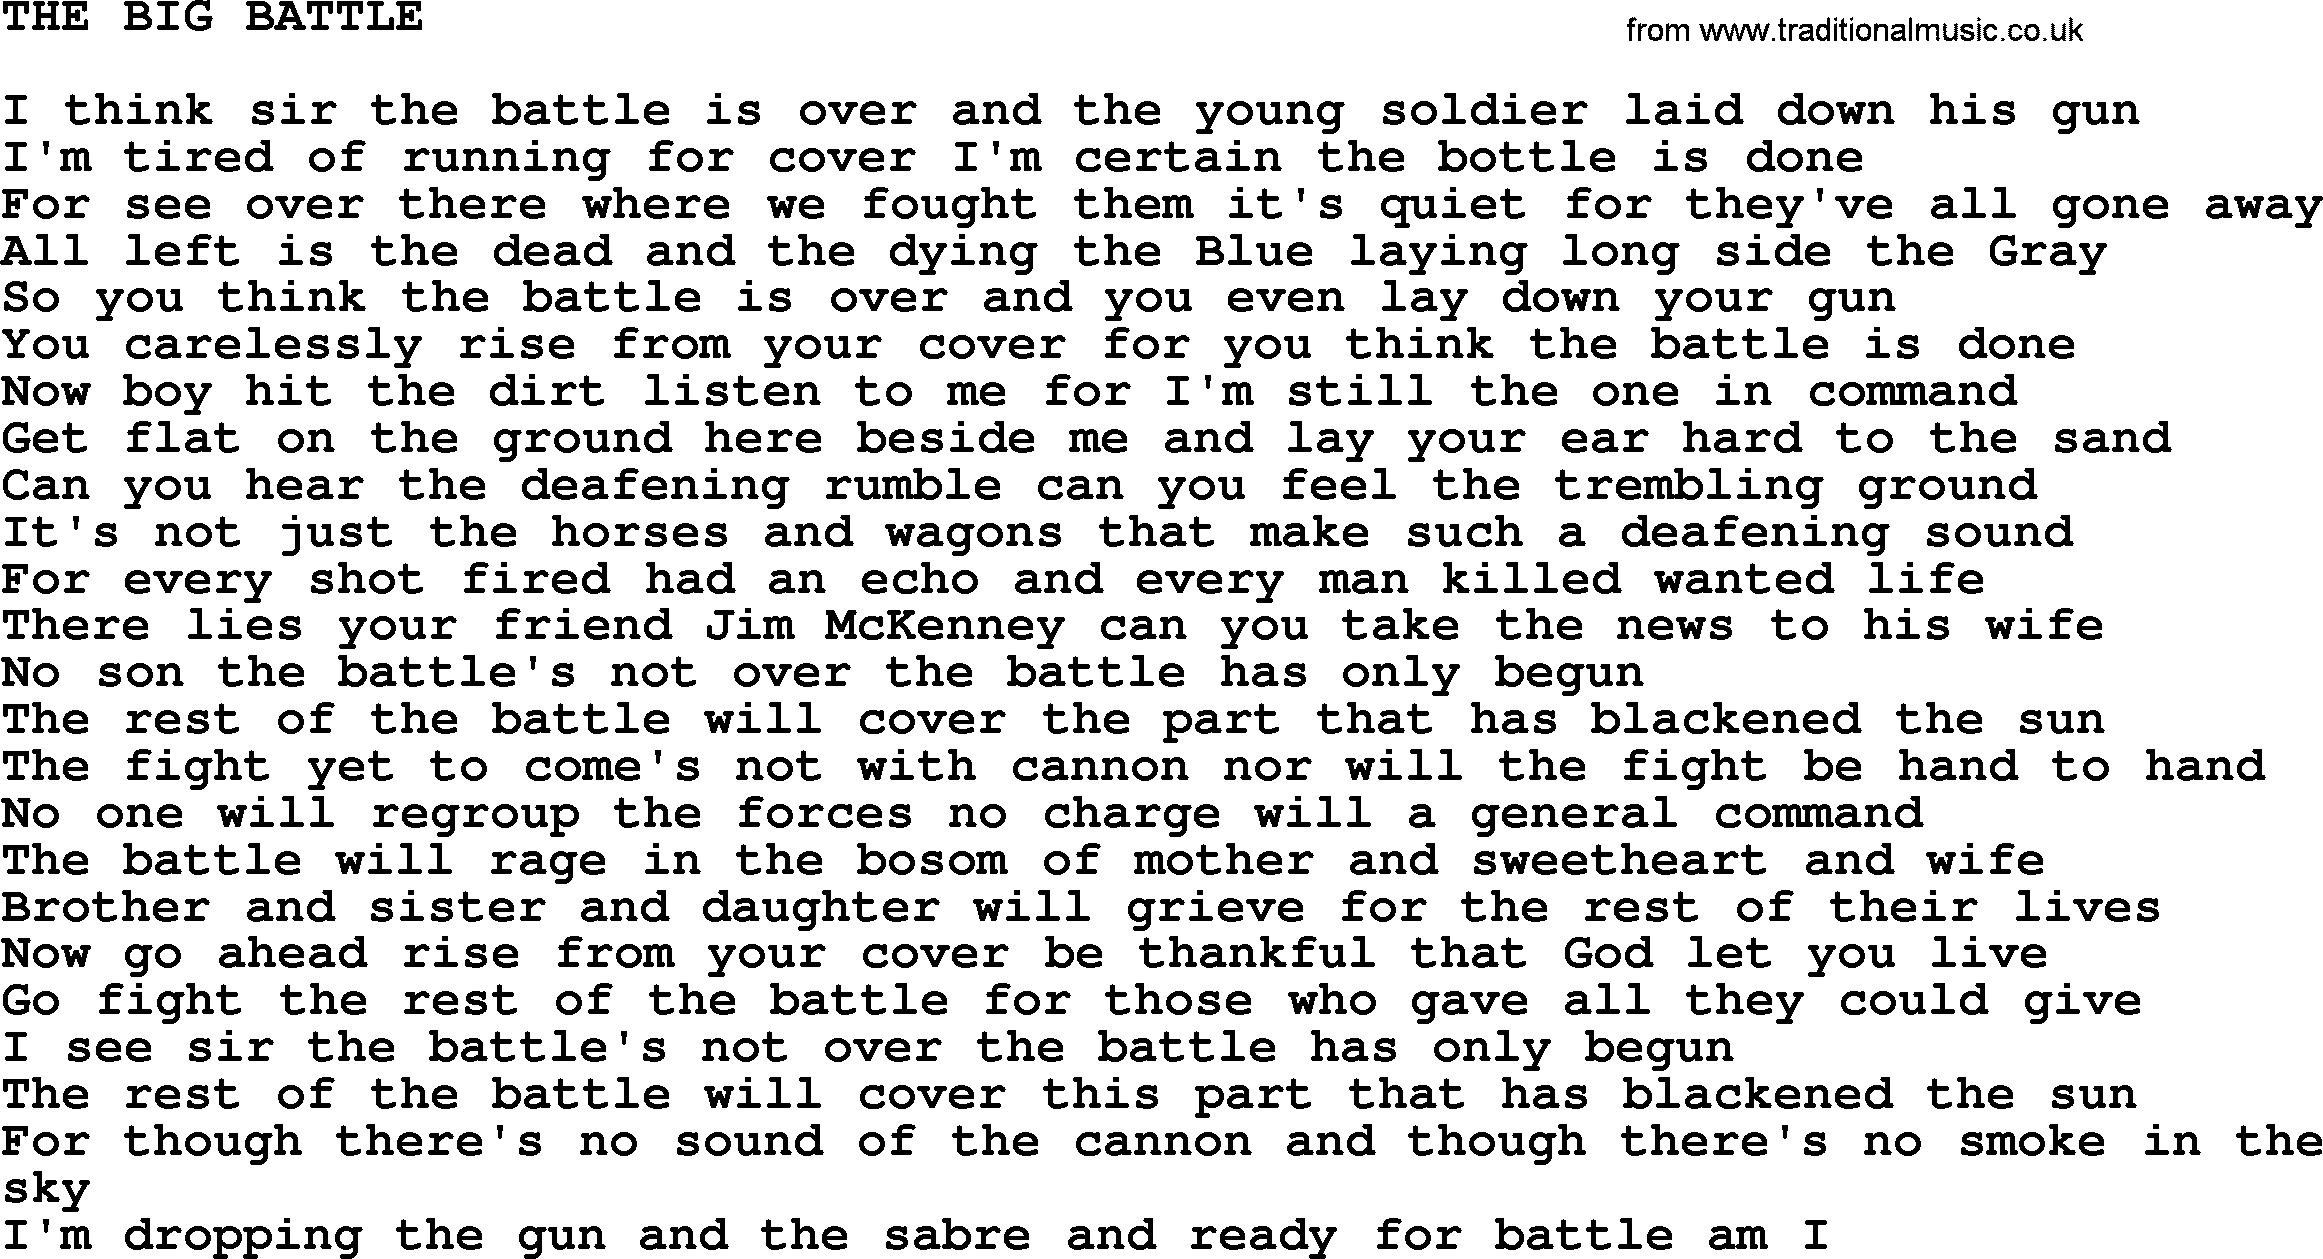 Johnny Cash song The Big Battle.txt lyrics